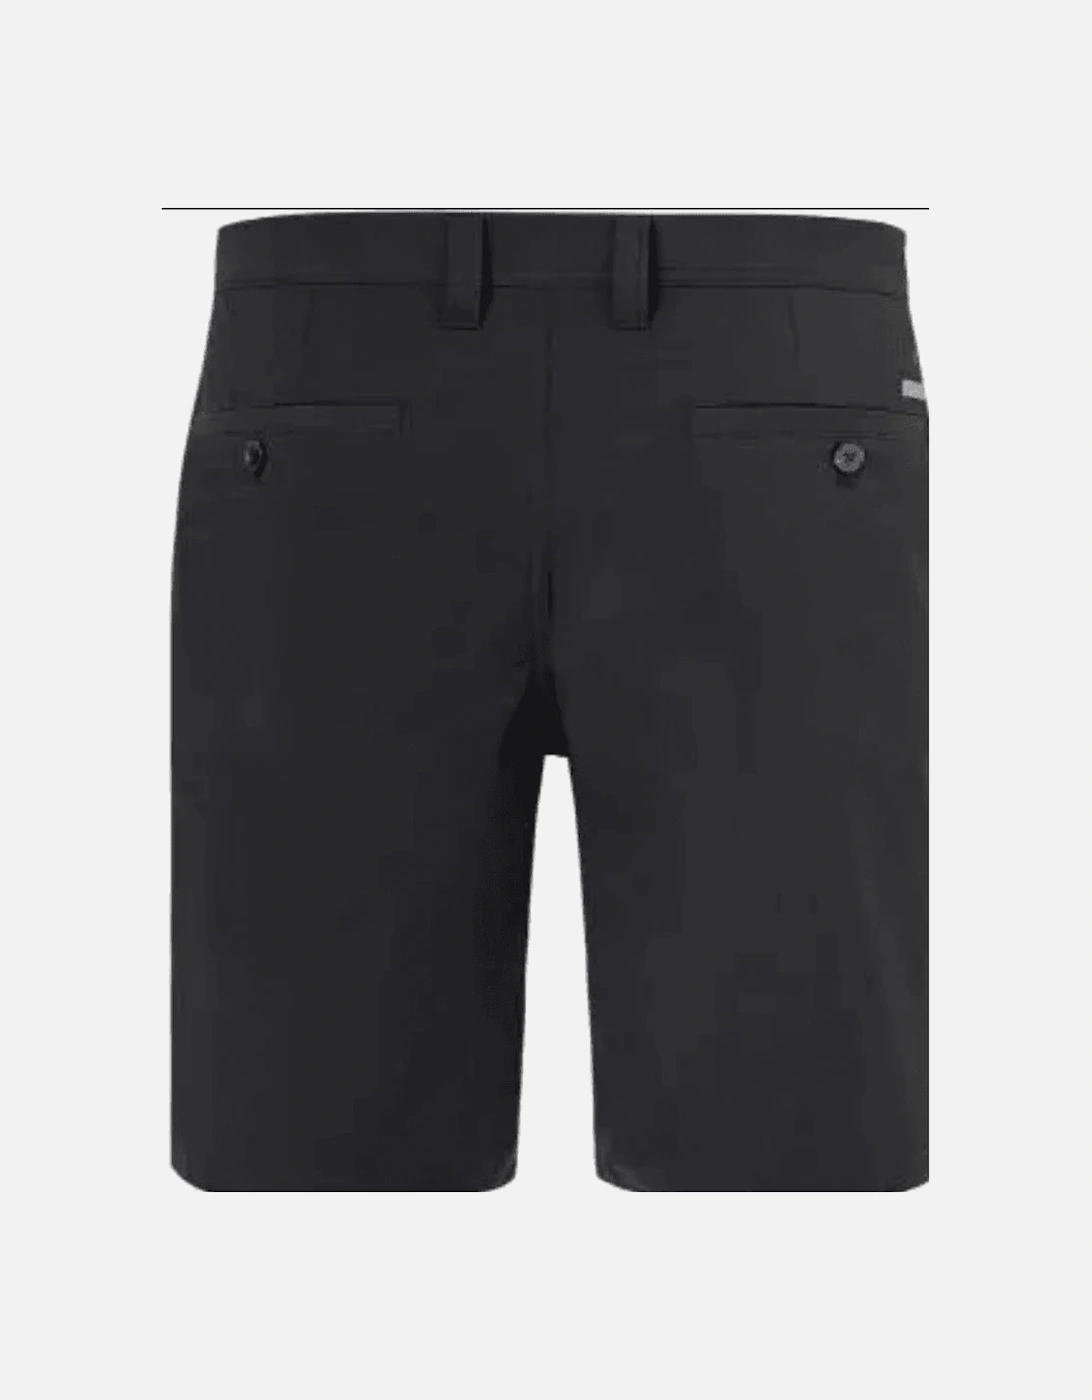 Slim Fit Black Golf Chino Shorts